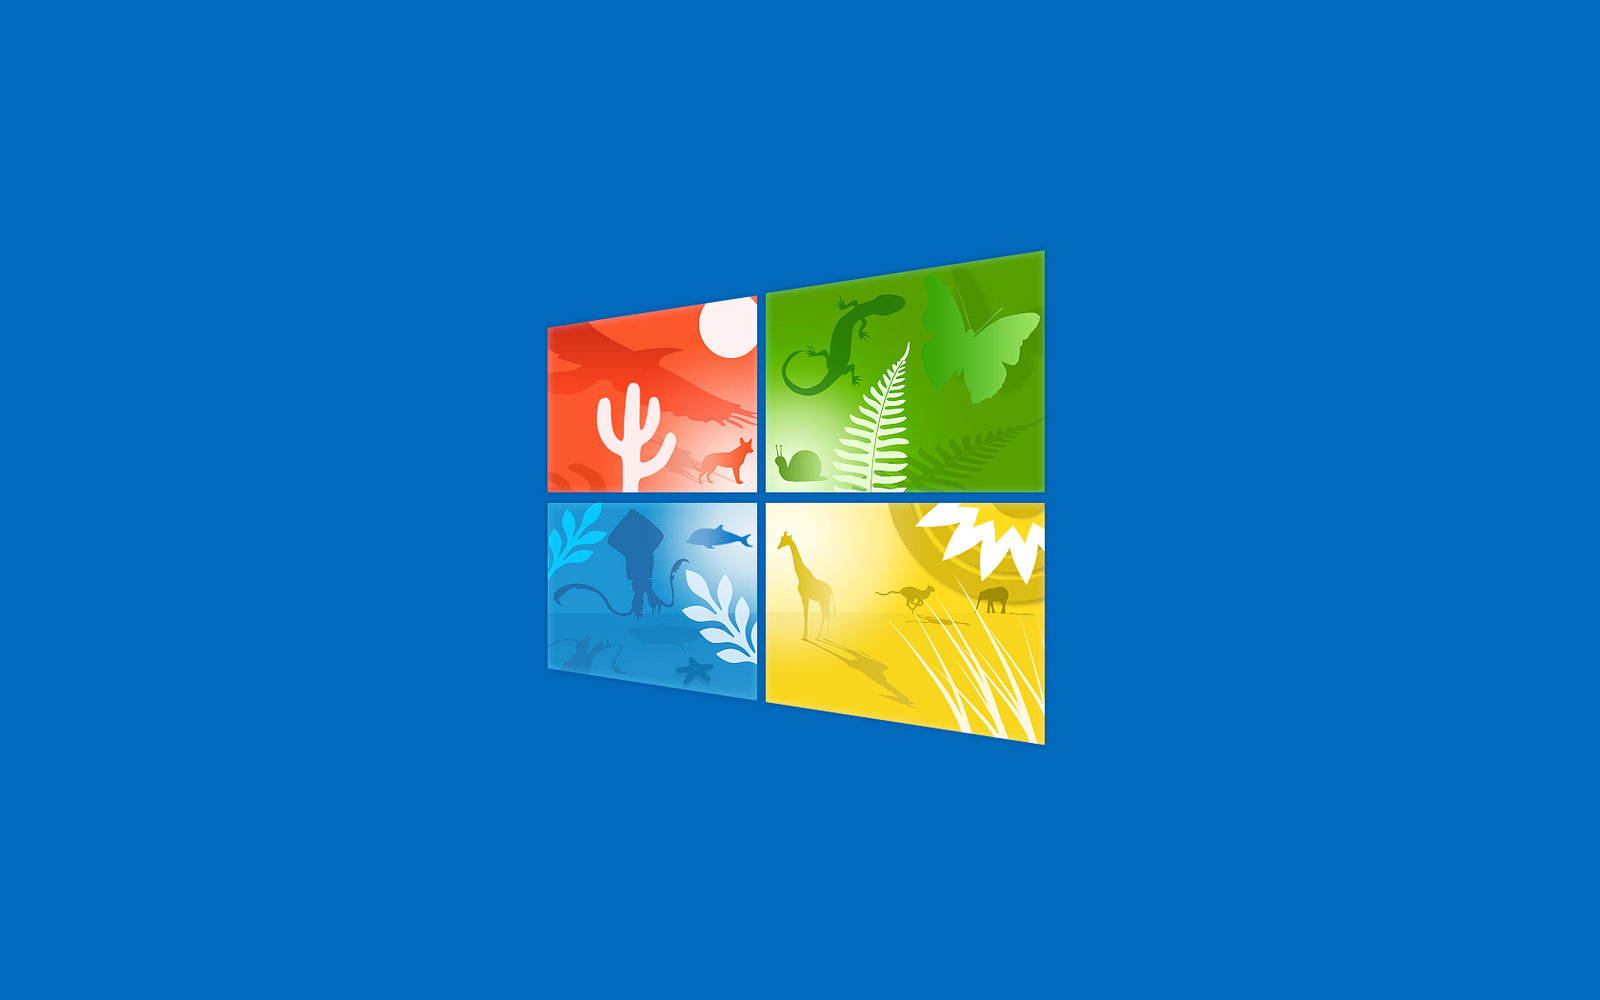 Cool Logo Windows Image Hd Wallpaper Brands And Logos Wallpaper Better